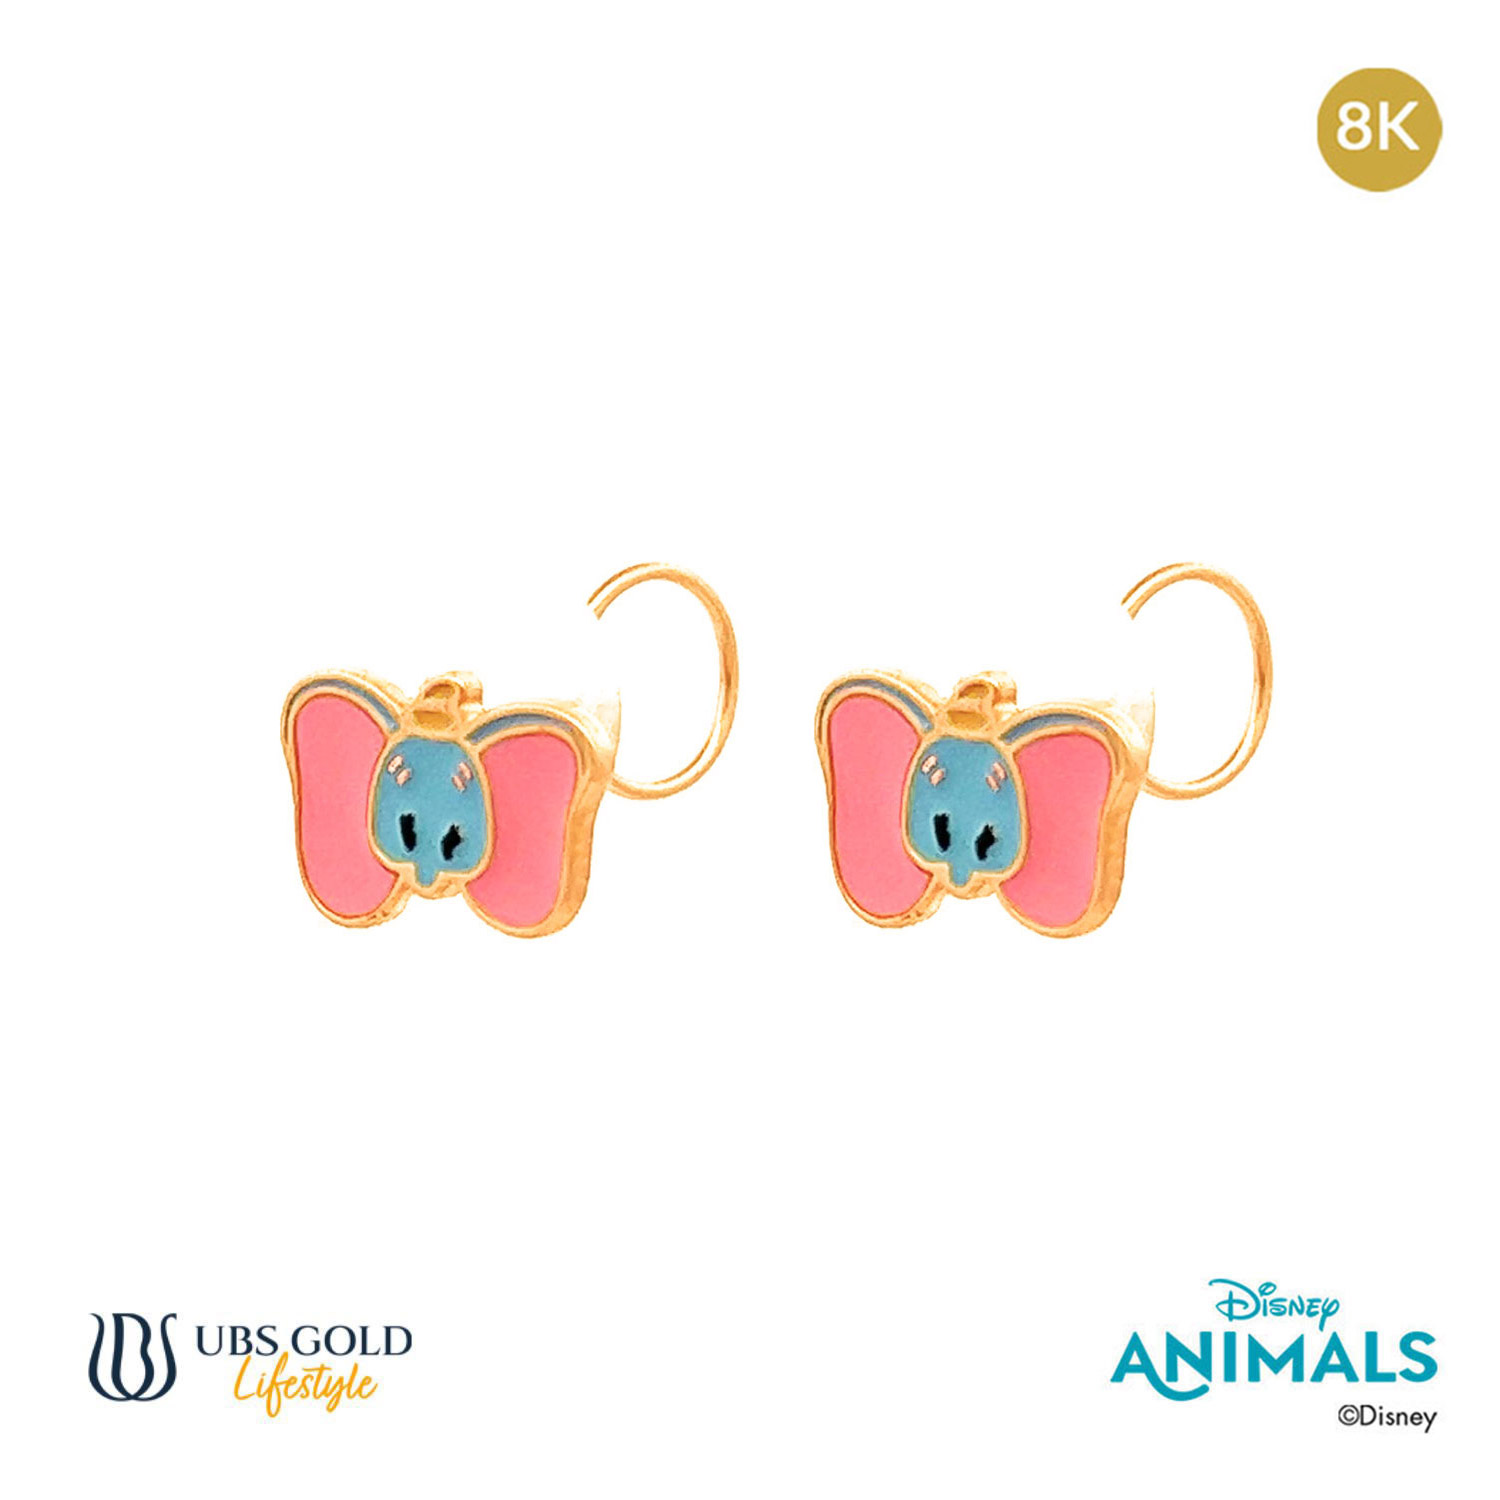 UBS Gold Anting Emas Anak Disney Animals - Awy0019K - 8K